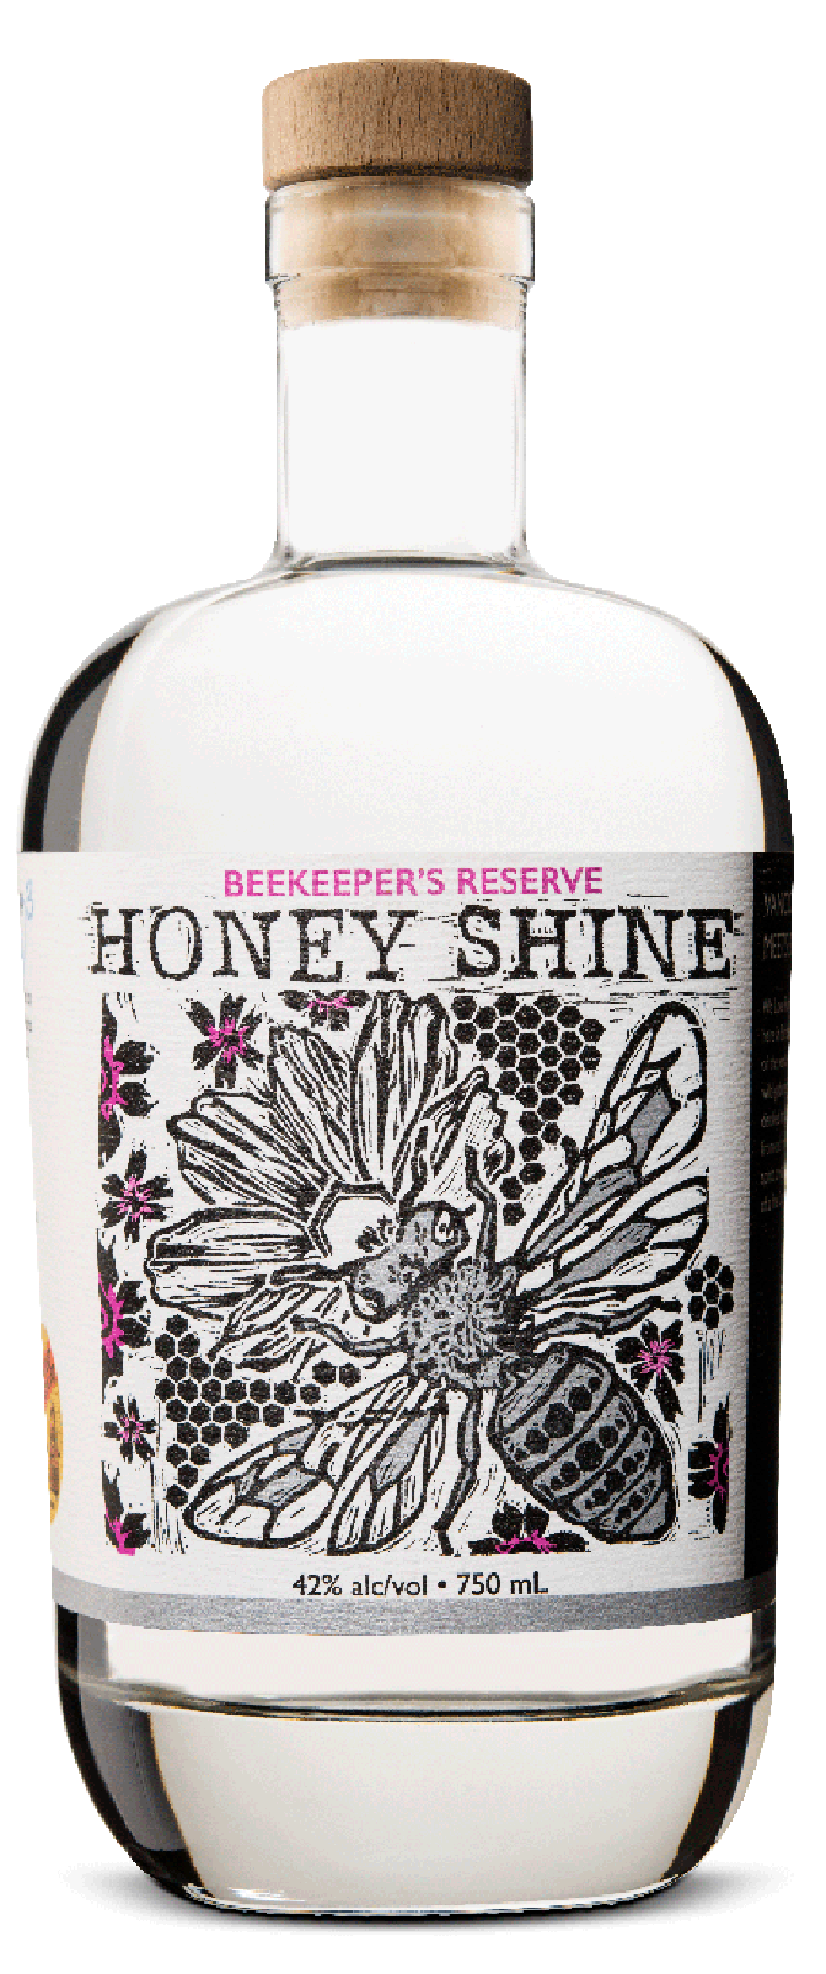 Black Bear ~ Spiced Honey 'Rum' 750ml – DEVINE Distillery